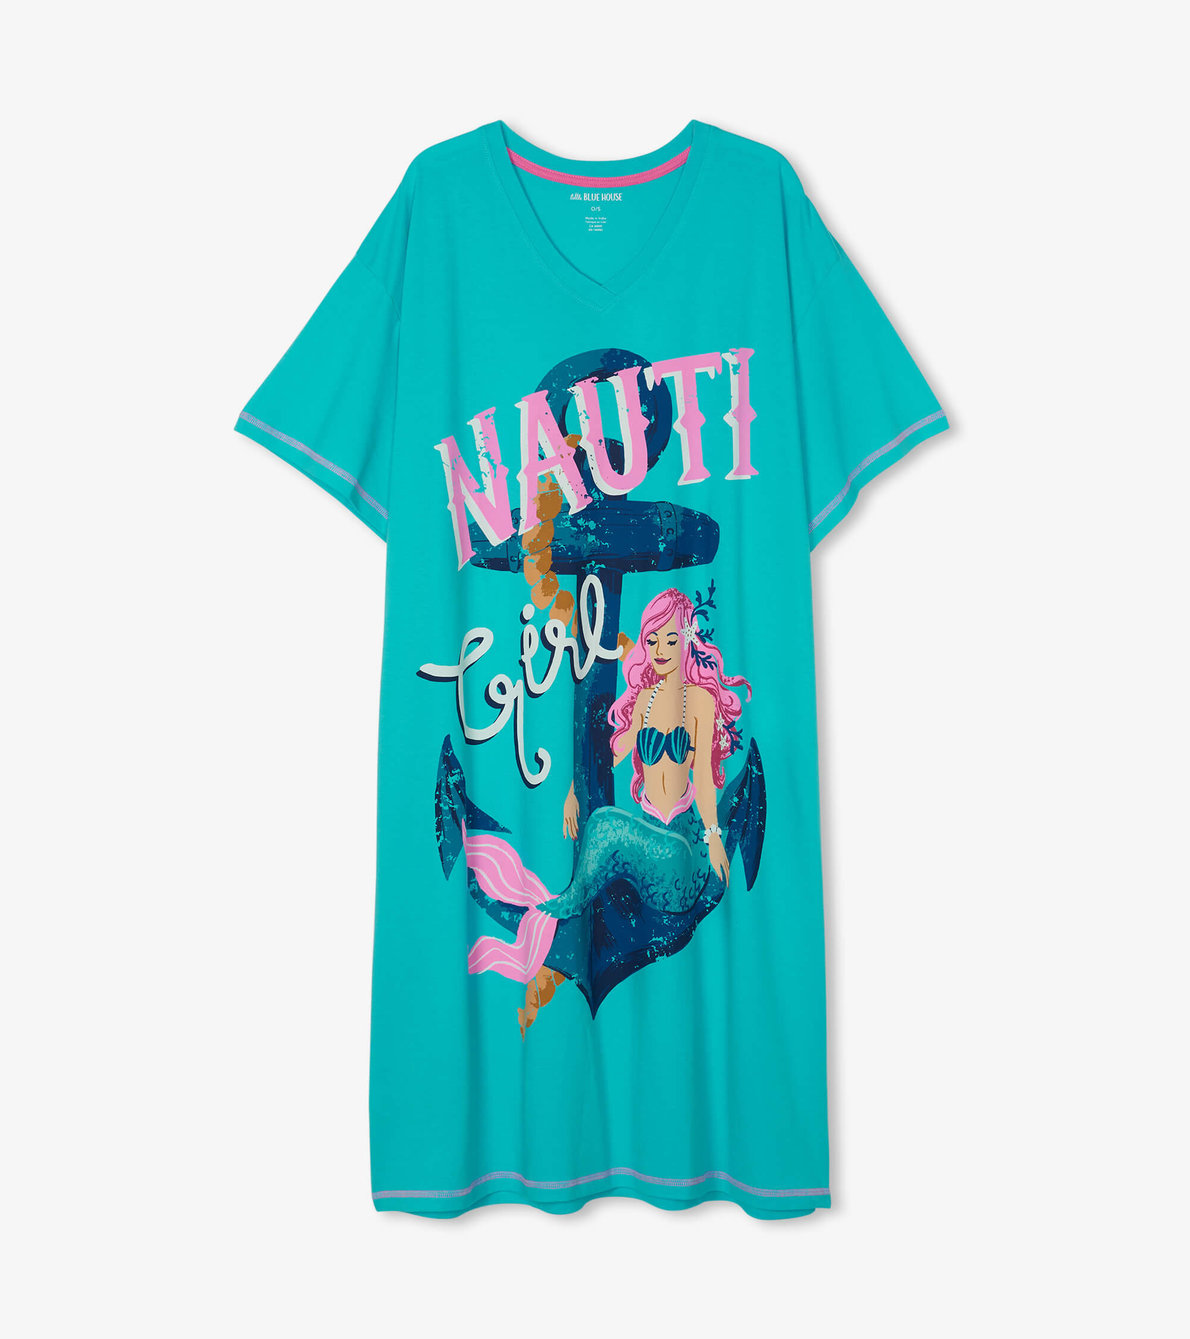 View larger image of Nauti Girl Women's Sleepshirt